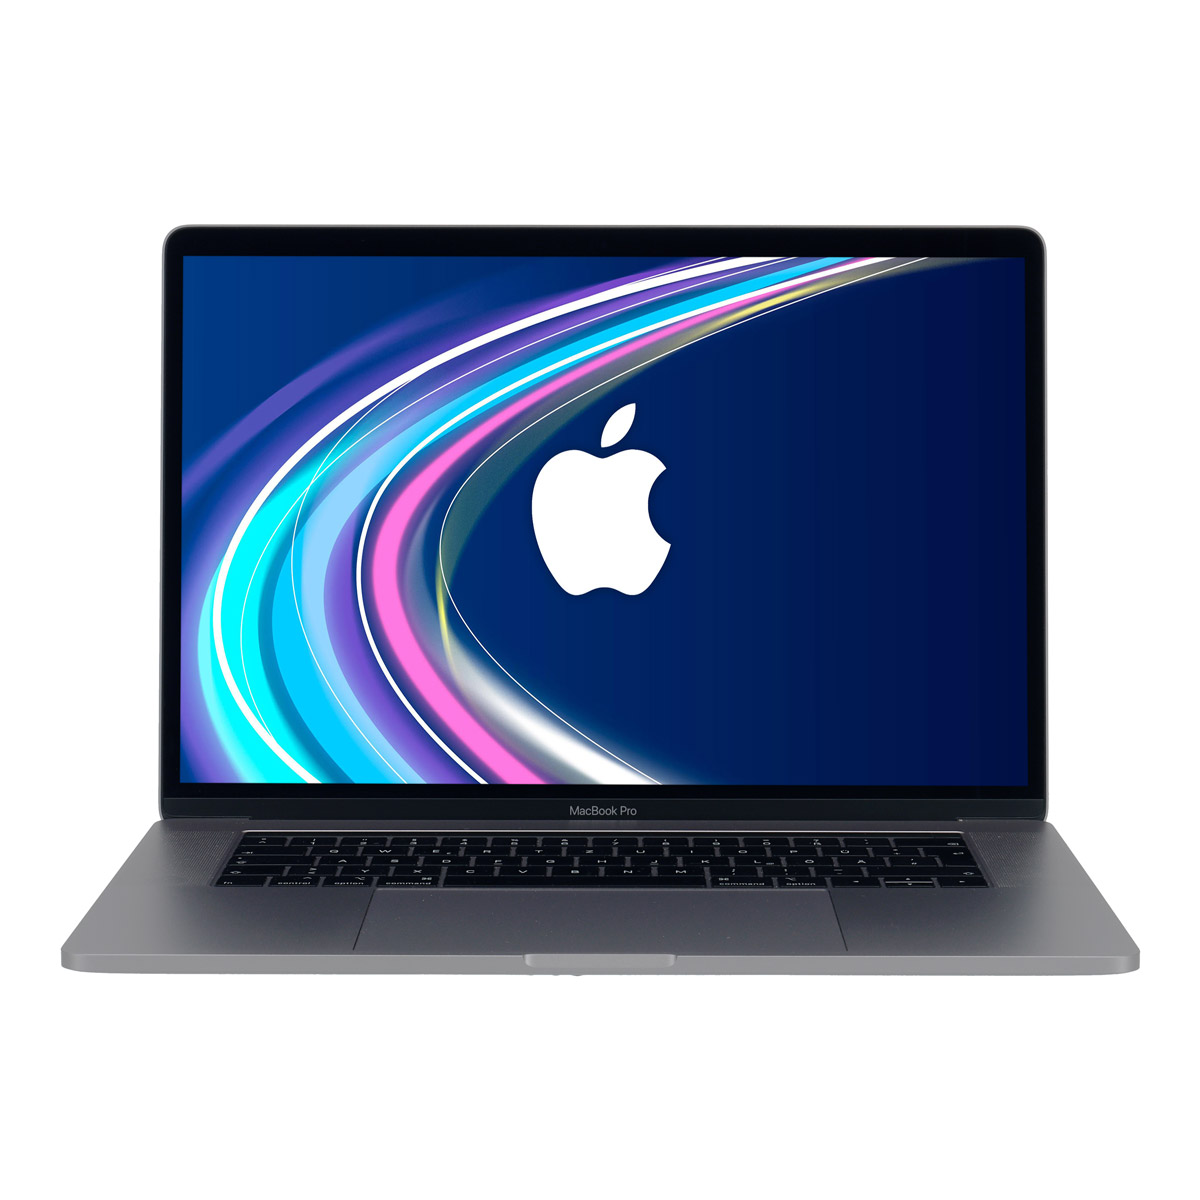 Apple MacBook Pro 15' 2018 Core i7 8750H 16 GB 500 GB SSD Webcam B